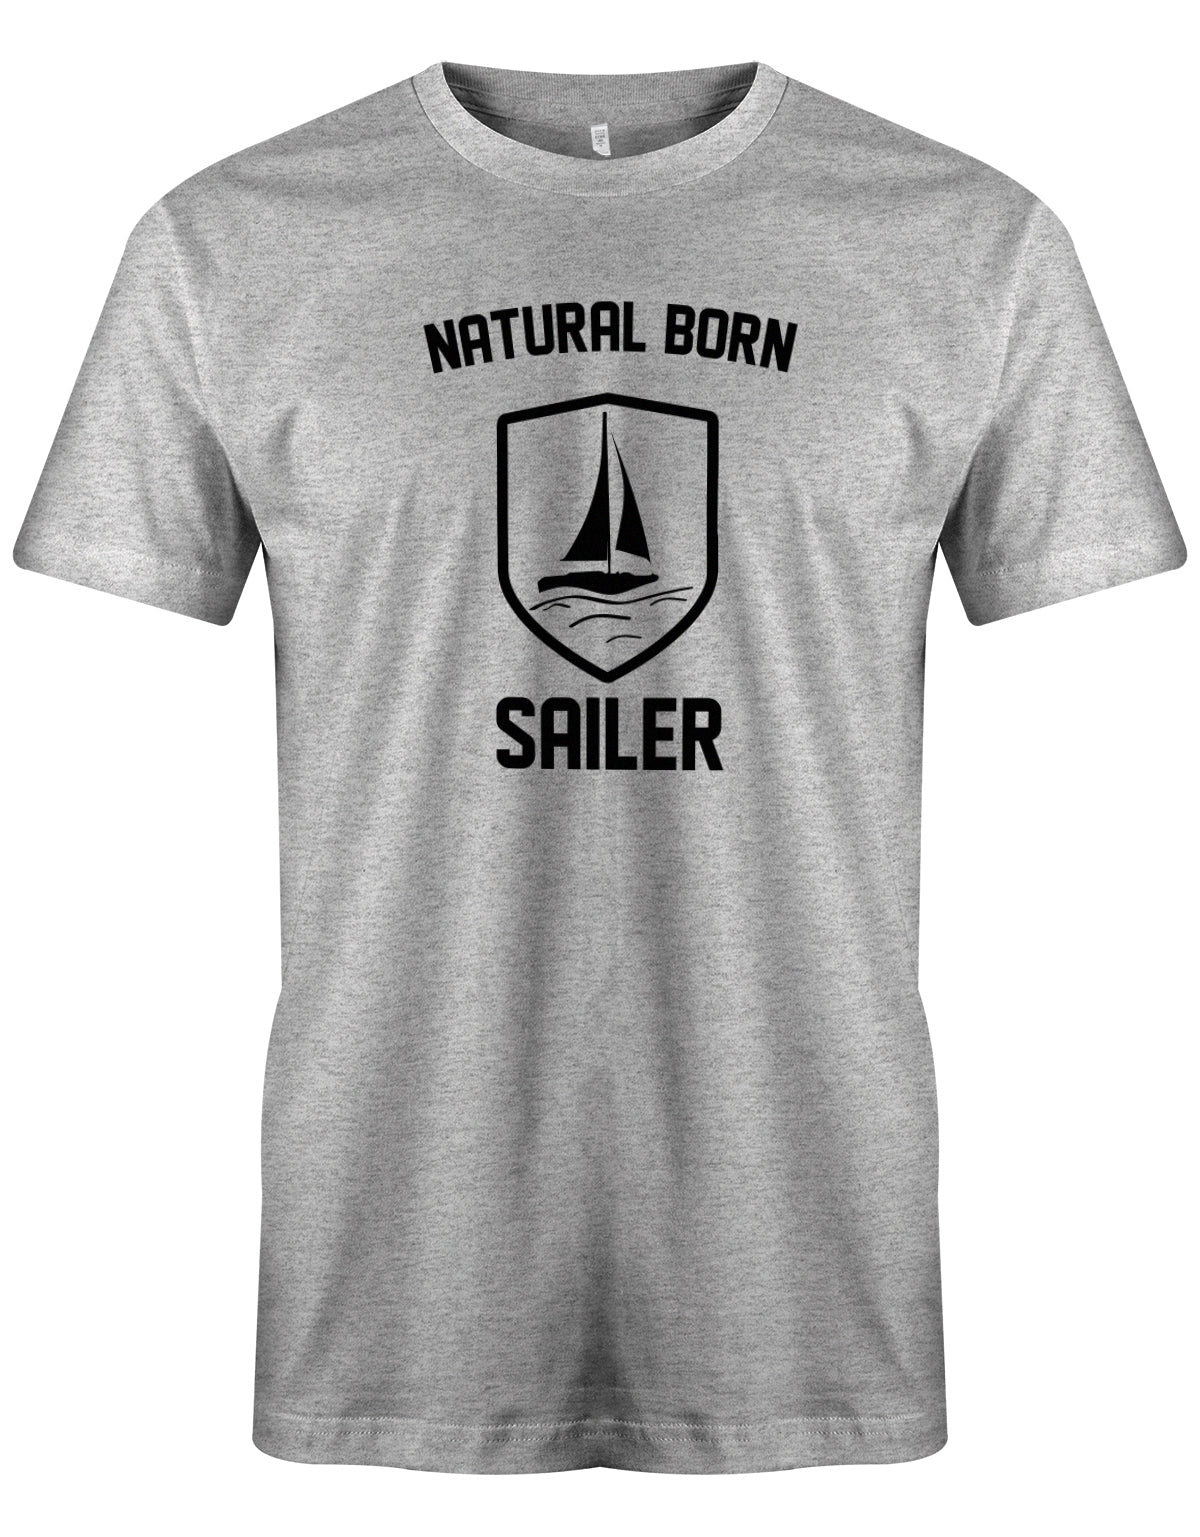 Das Segler t-shirt bedruckt mit "Natural born Sailer - Der geborene Segler". Grau